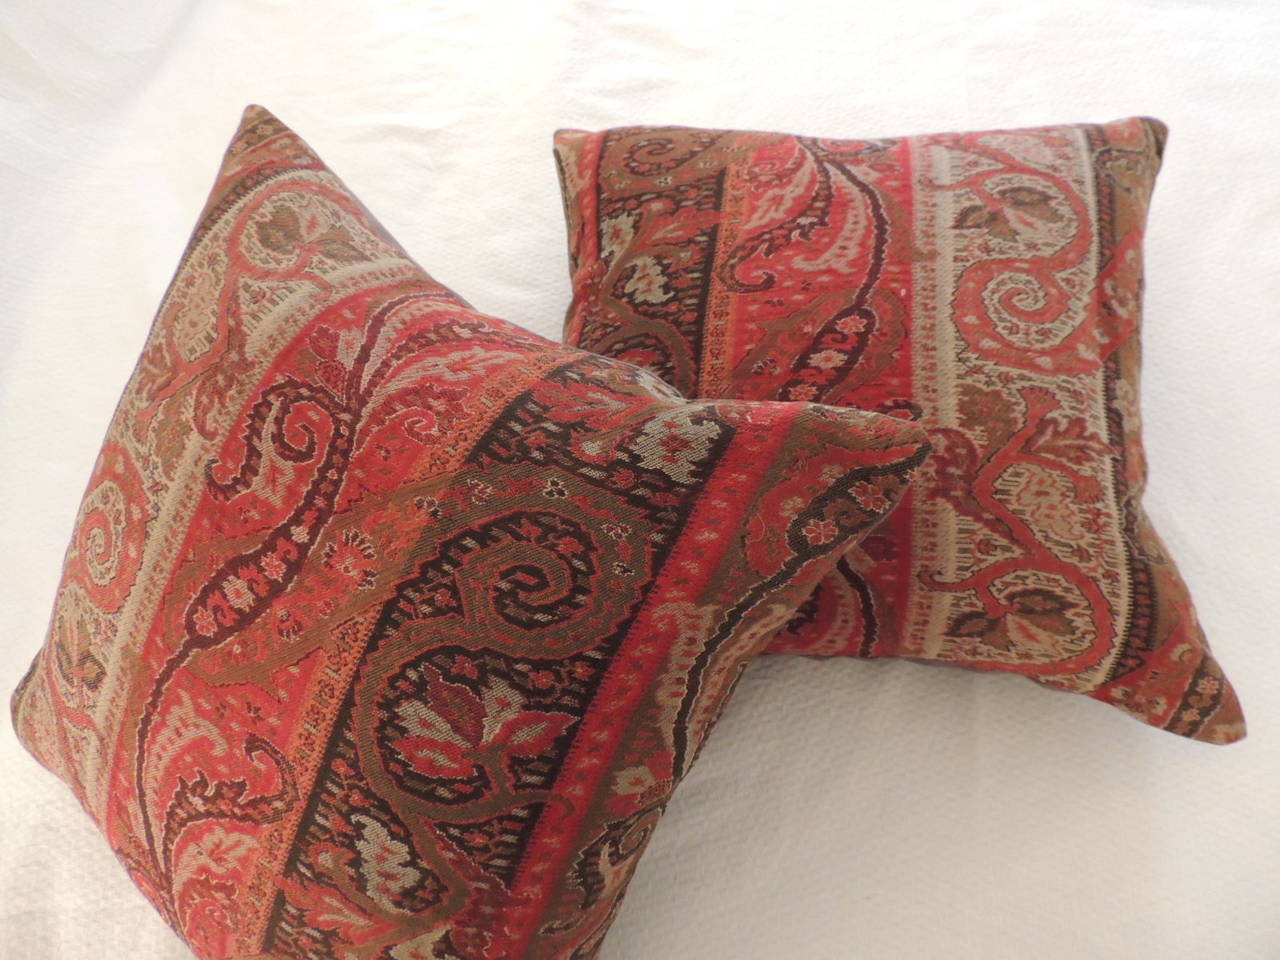 English Pair of Antique Textile Stripe Kashmir Red Paisley Pillows